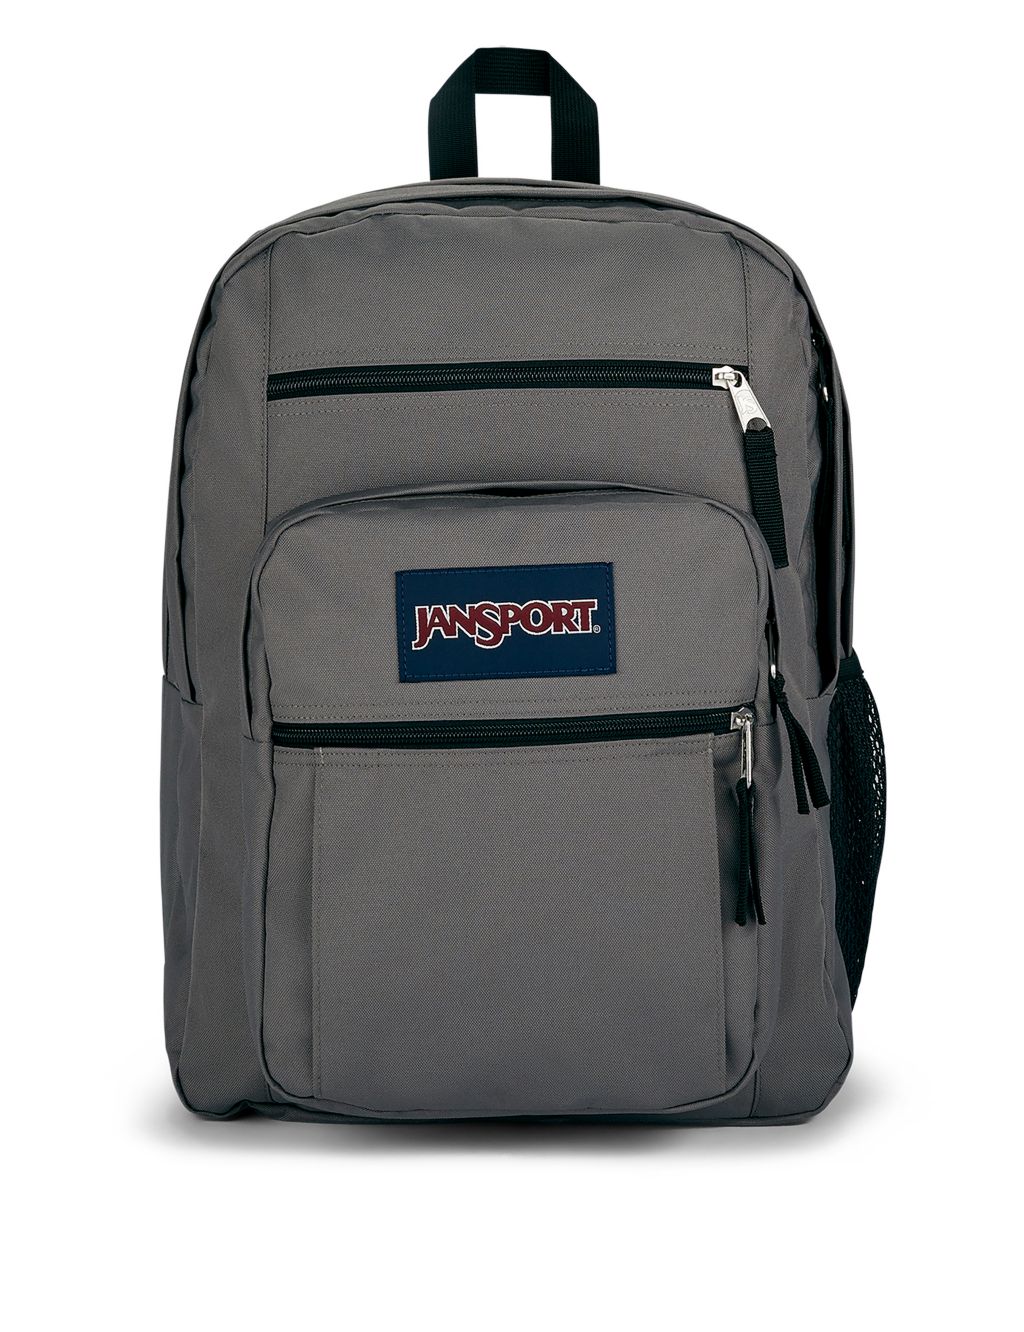 Big Student Backpack image 1